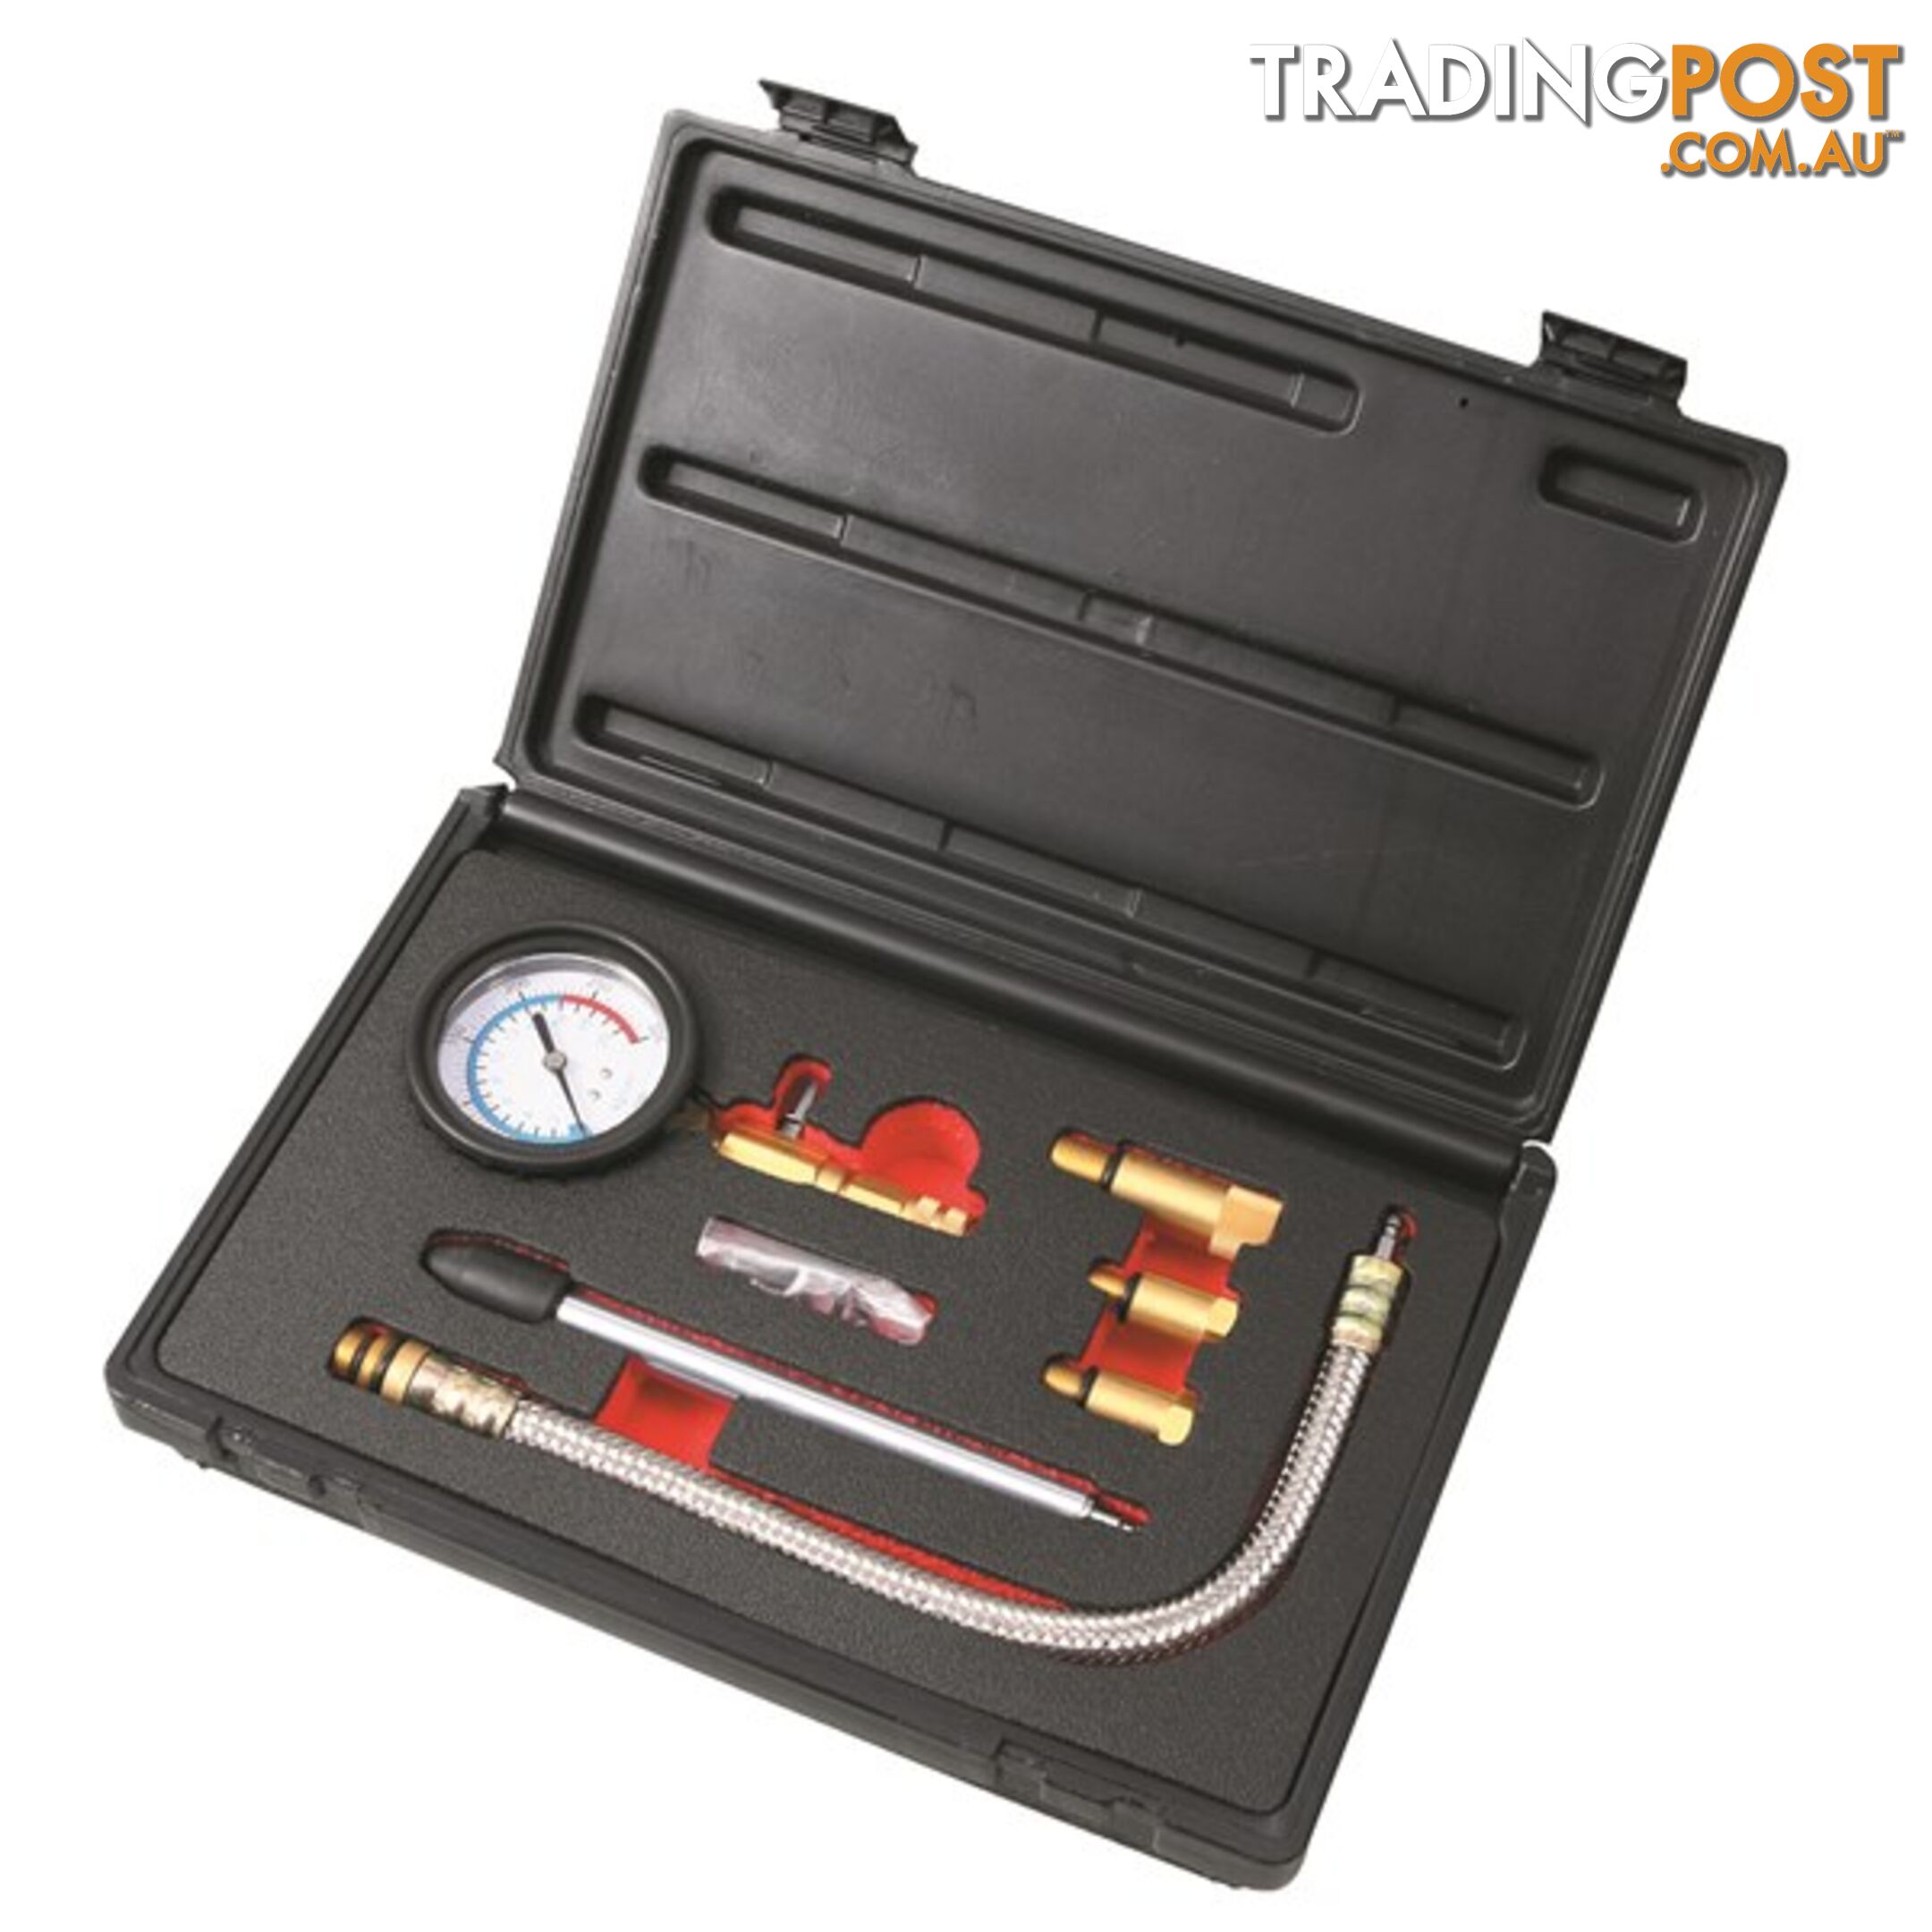 Toledo Compression Tester Kit  - Petrol 300psi SKU - 304175